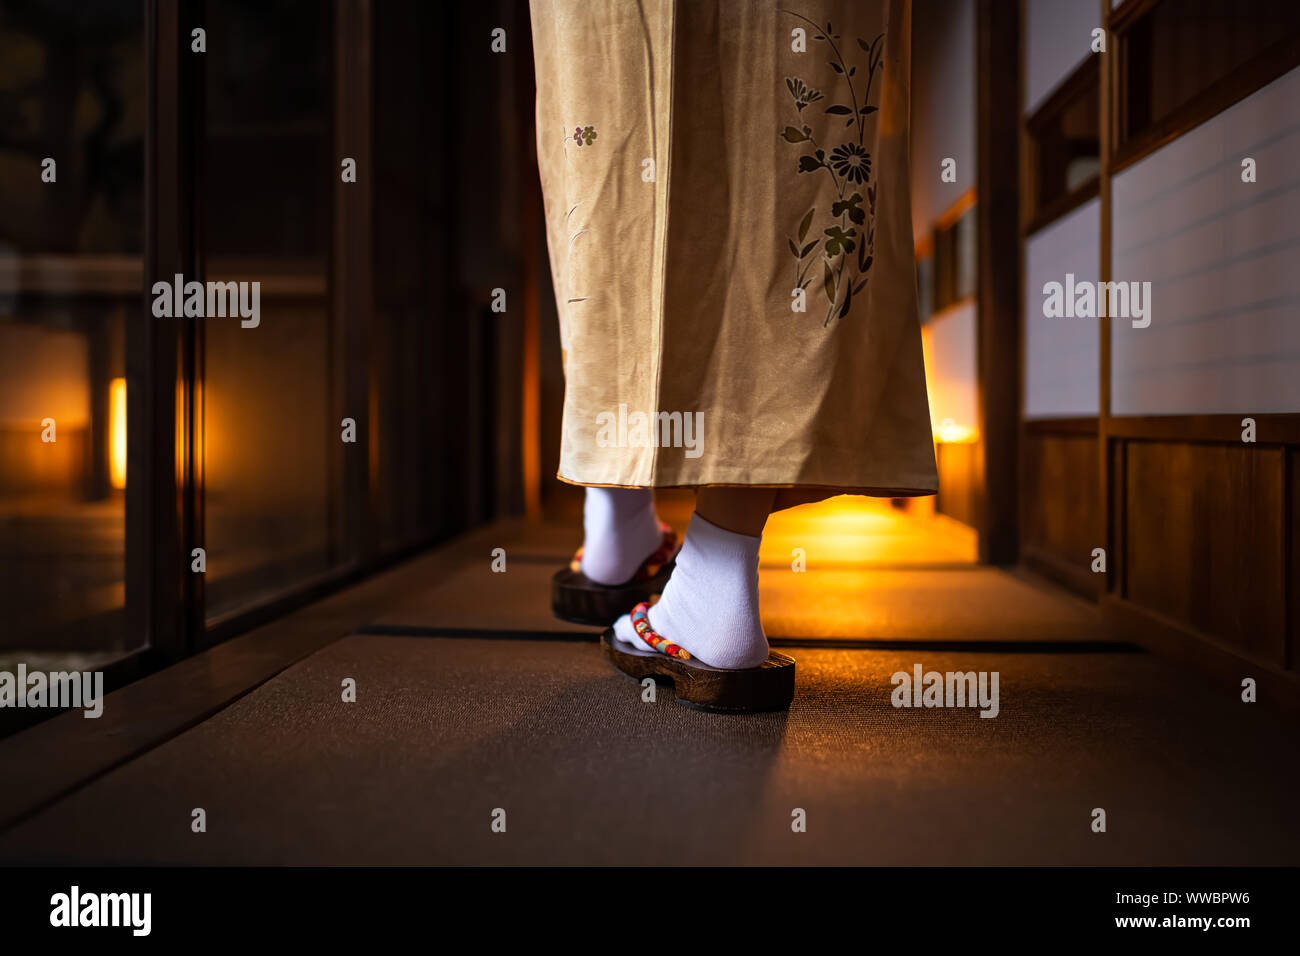 Traditional Japanese home or ryoka with tatami mat floor, shoji sliding paper doors, back of woman feet in kimono and geta shoes tabi socks walking in Stock Photo